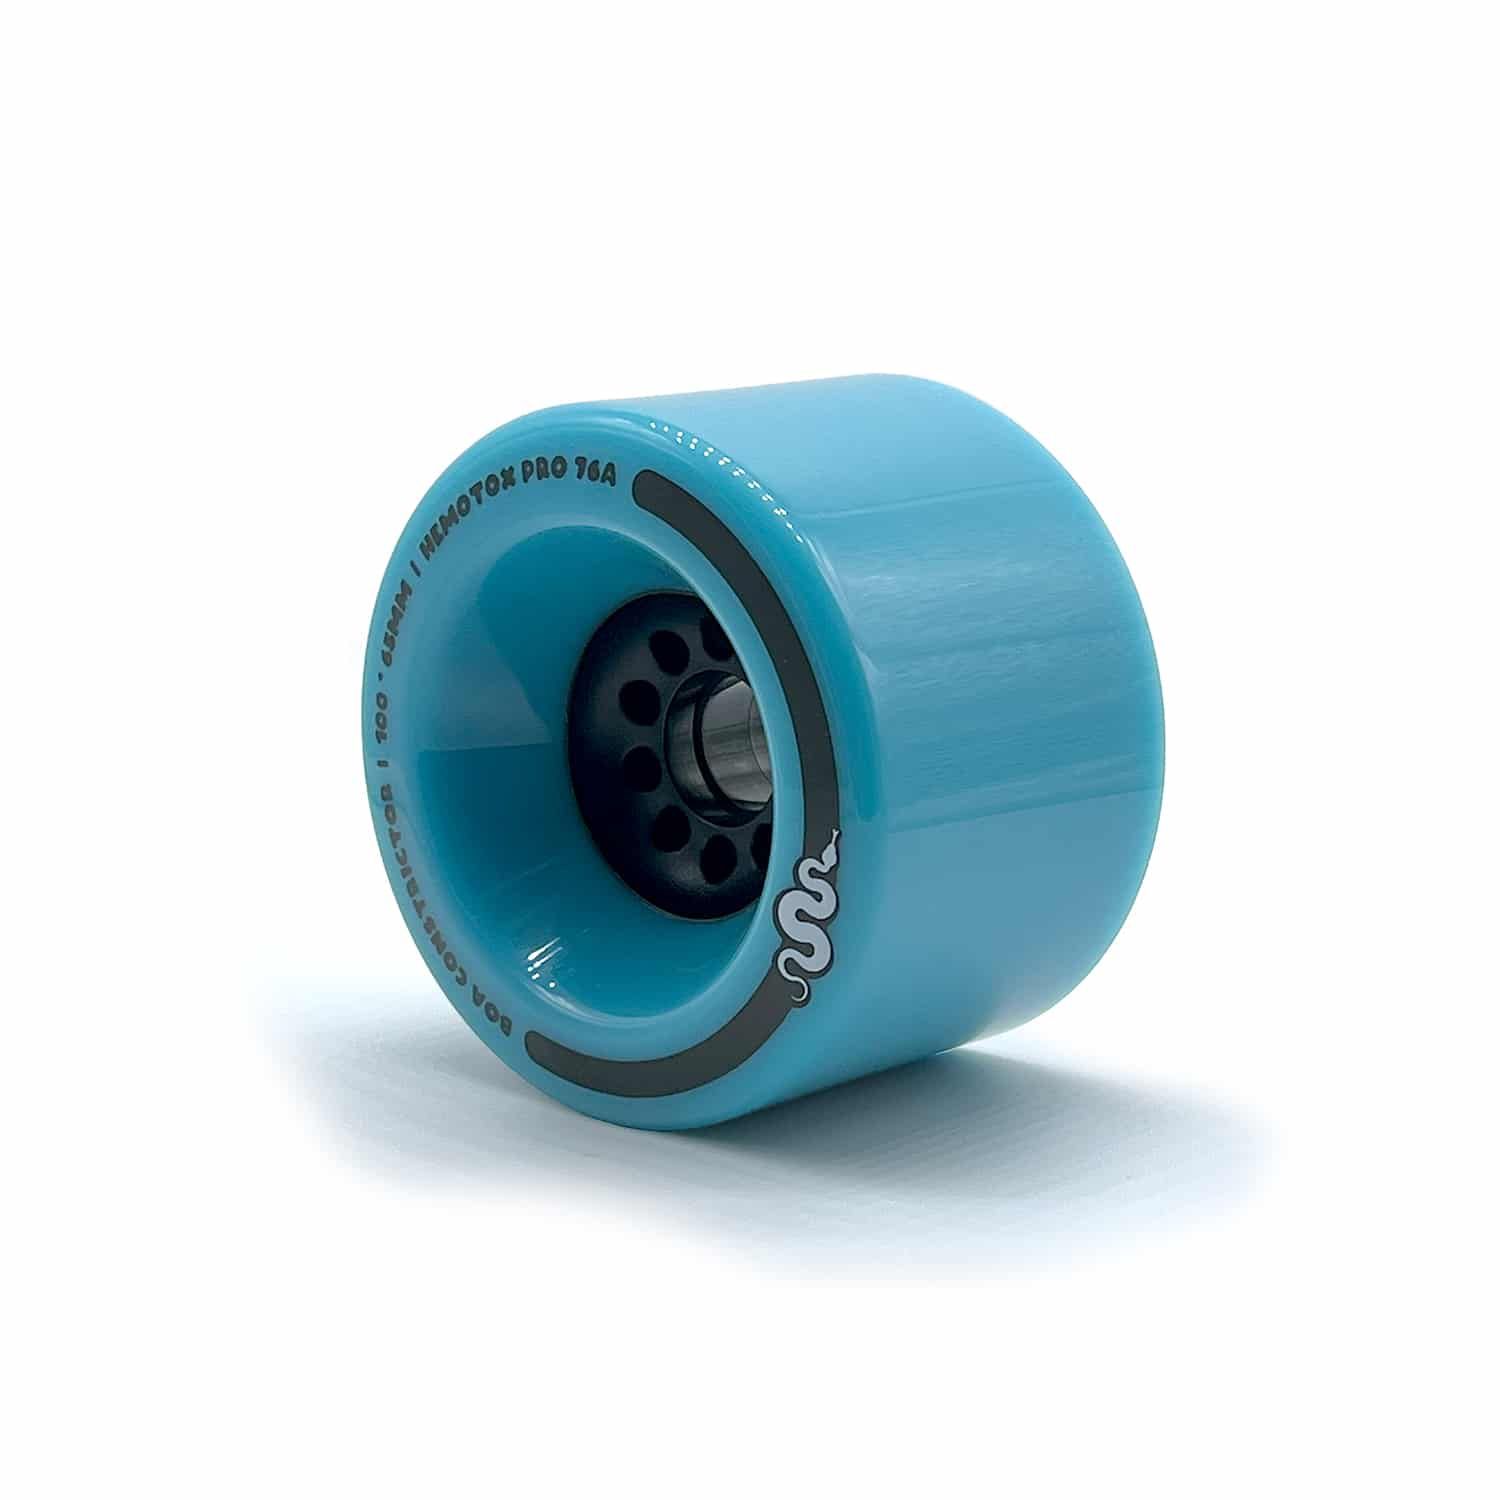 Boa Constrictor 100mm Race Wheels in Blue 76A.